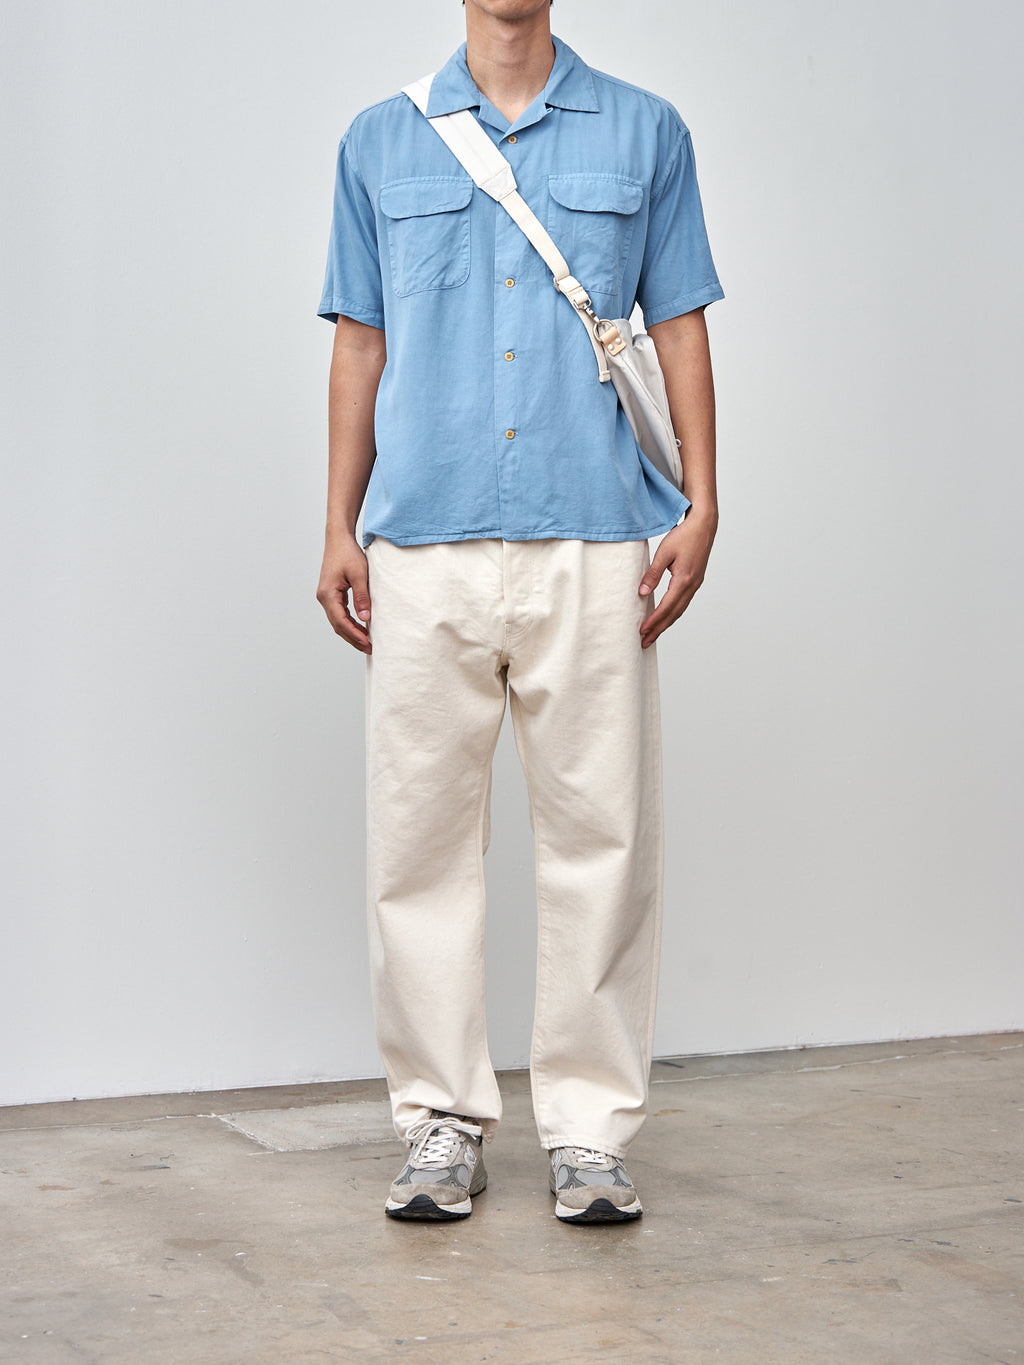 Namu Shop - ts(s) Garment Dye Round Flap Pocket S/S Shirt - Blue